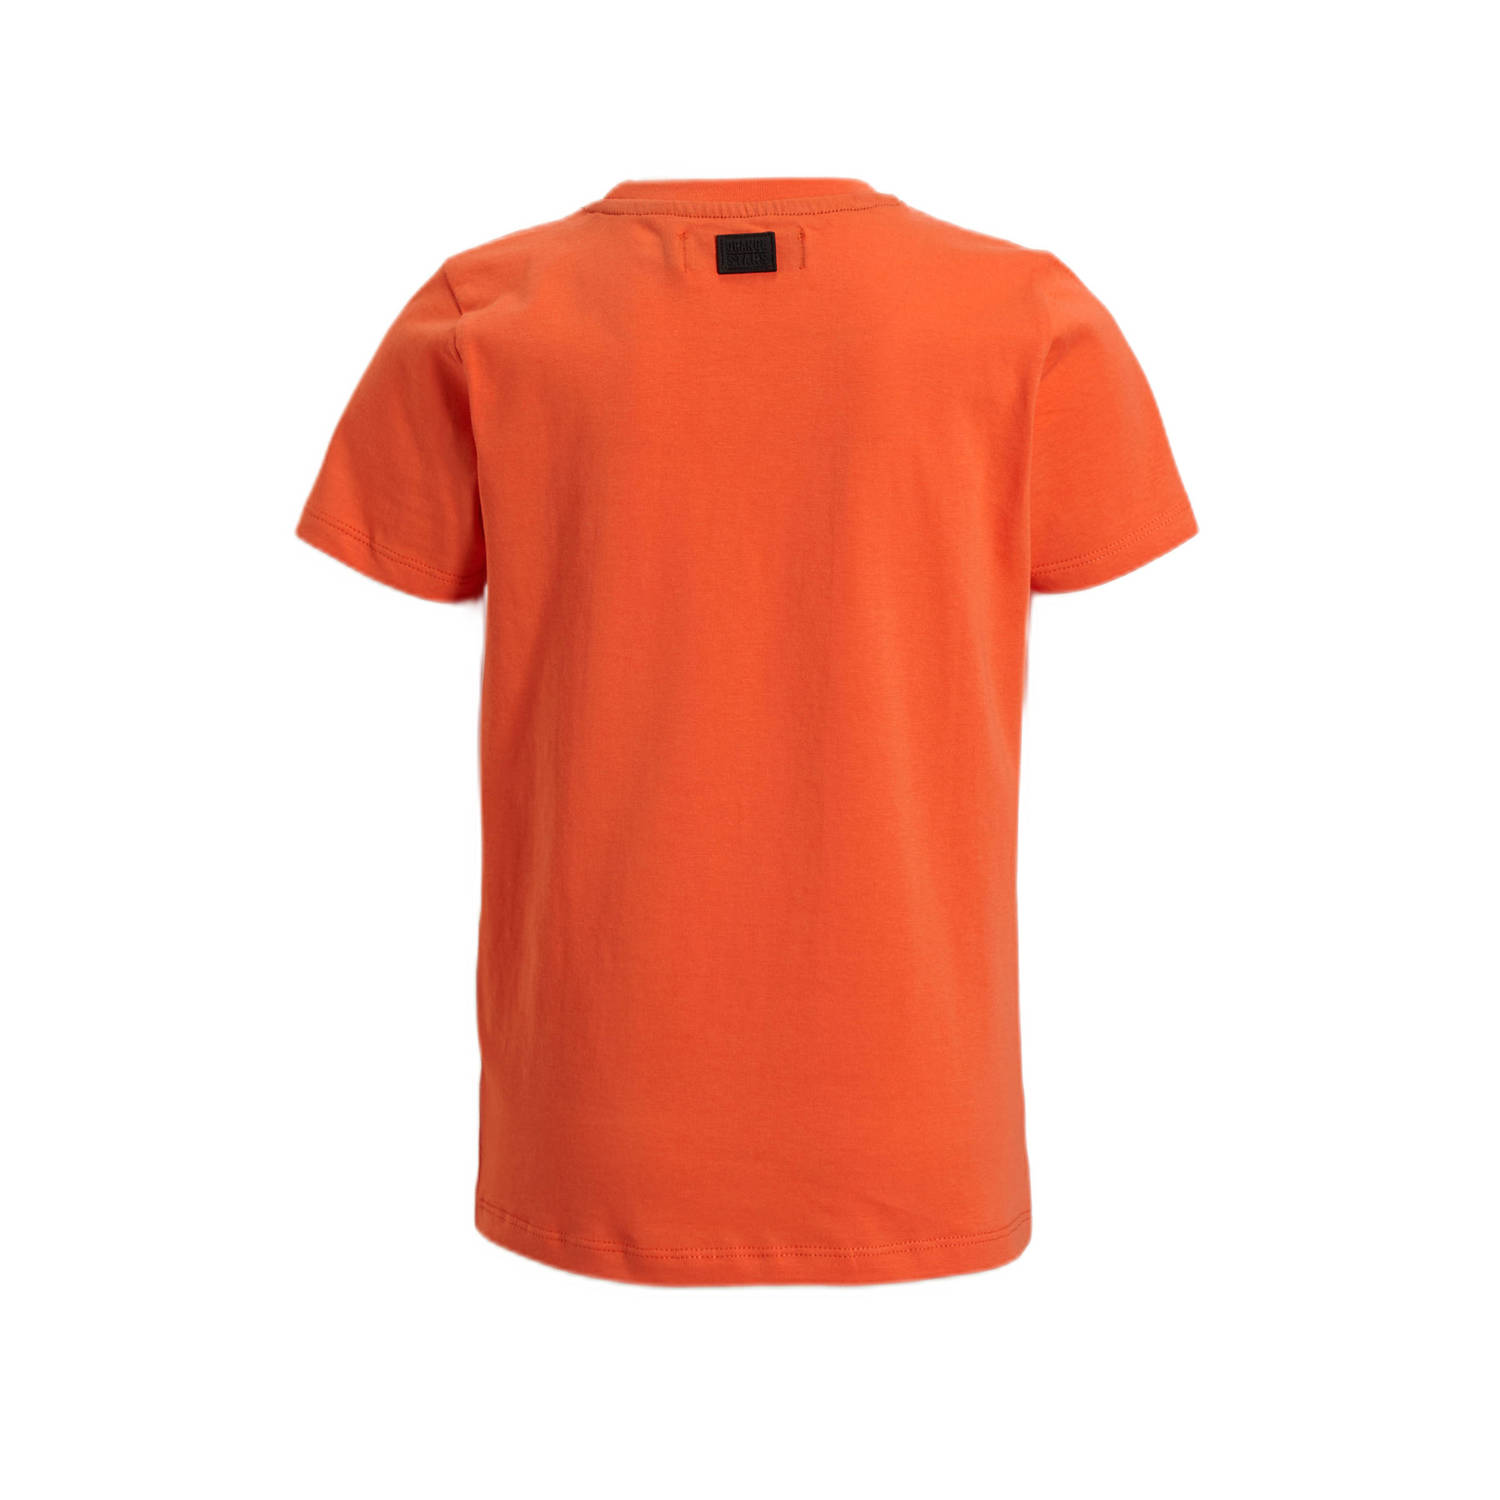 Orange Stars T-shirt Philip met printopdruk oranje